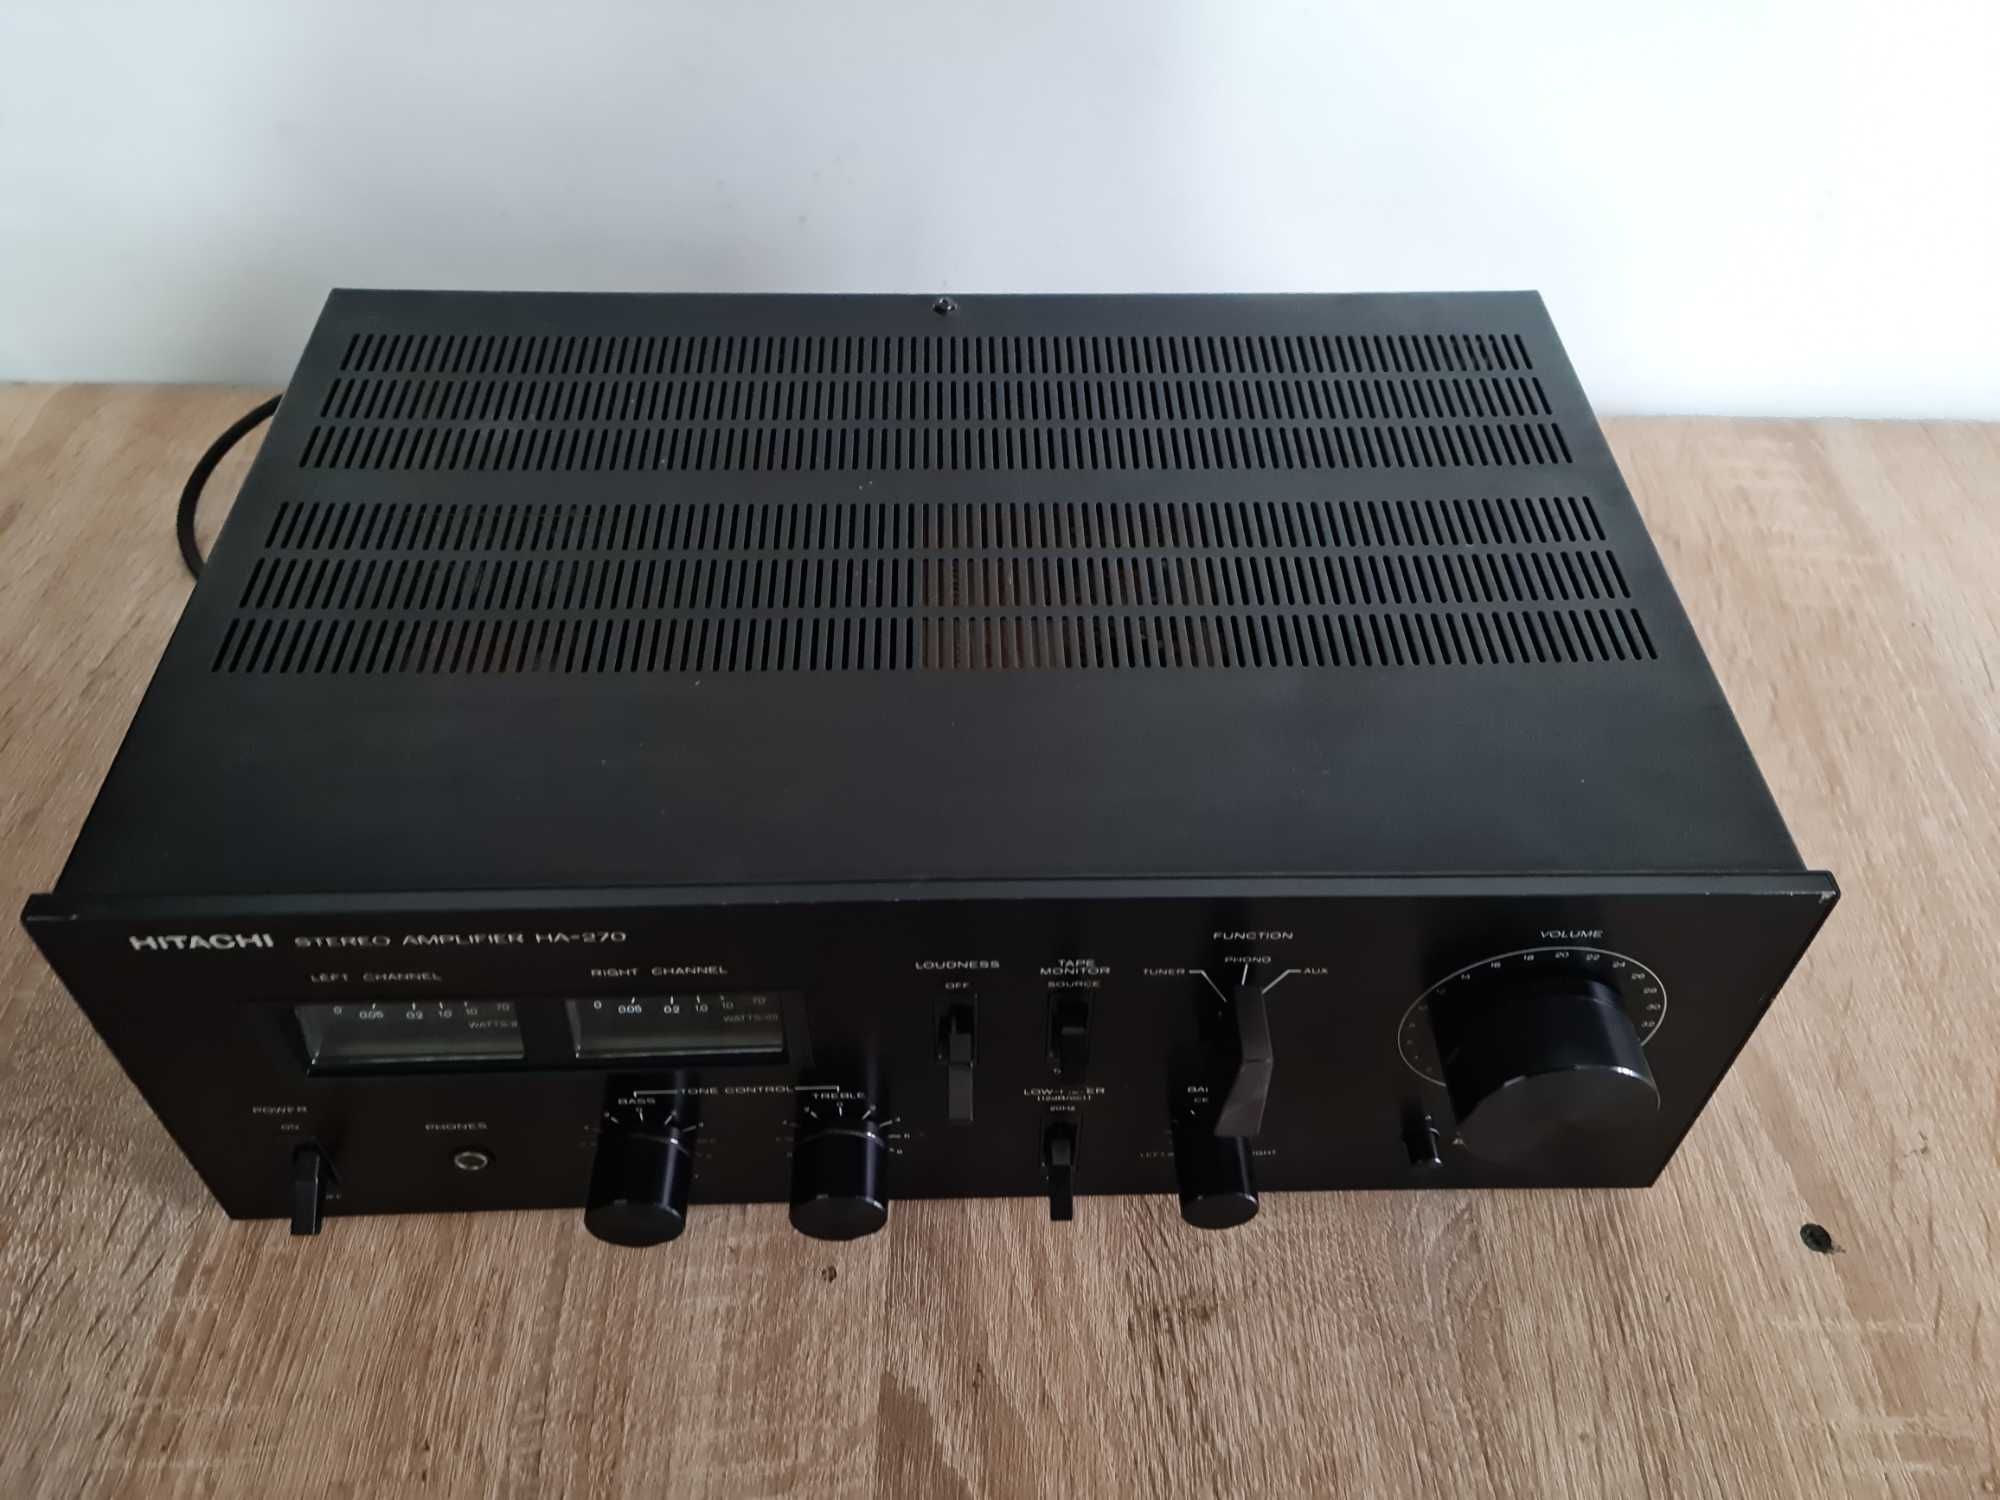 amplificator vintage Hitachi HA-270